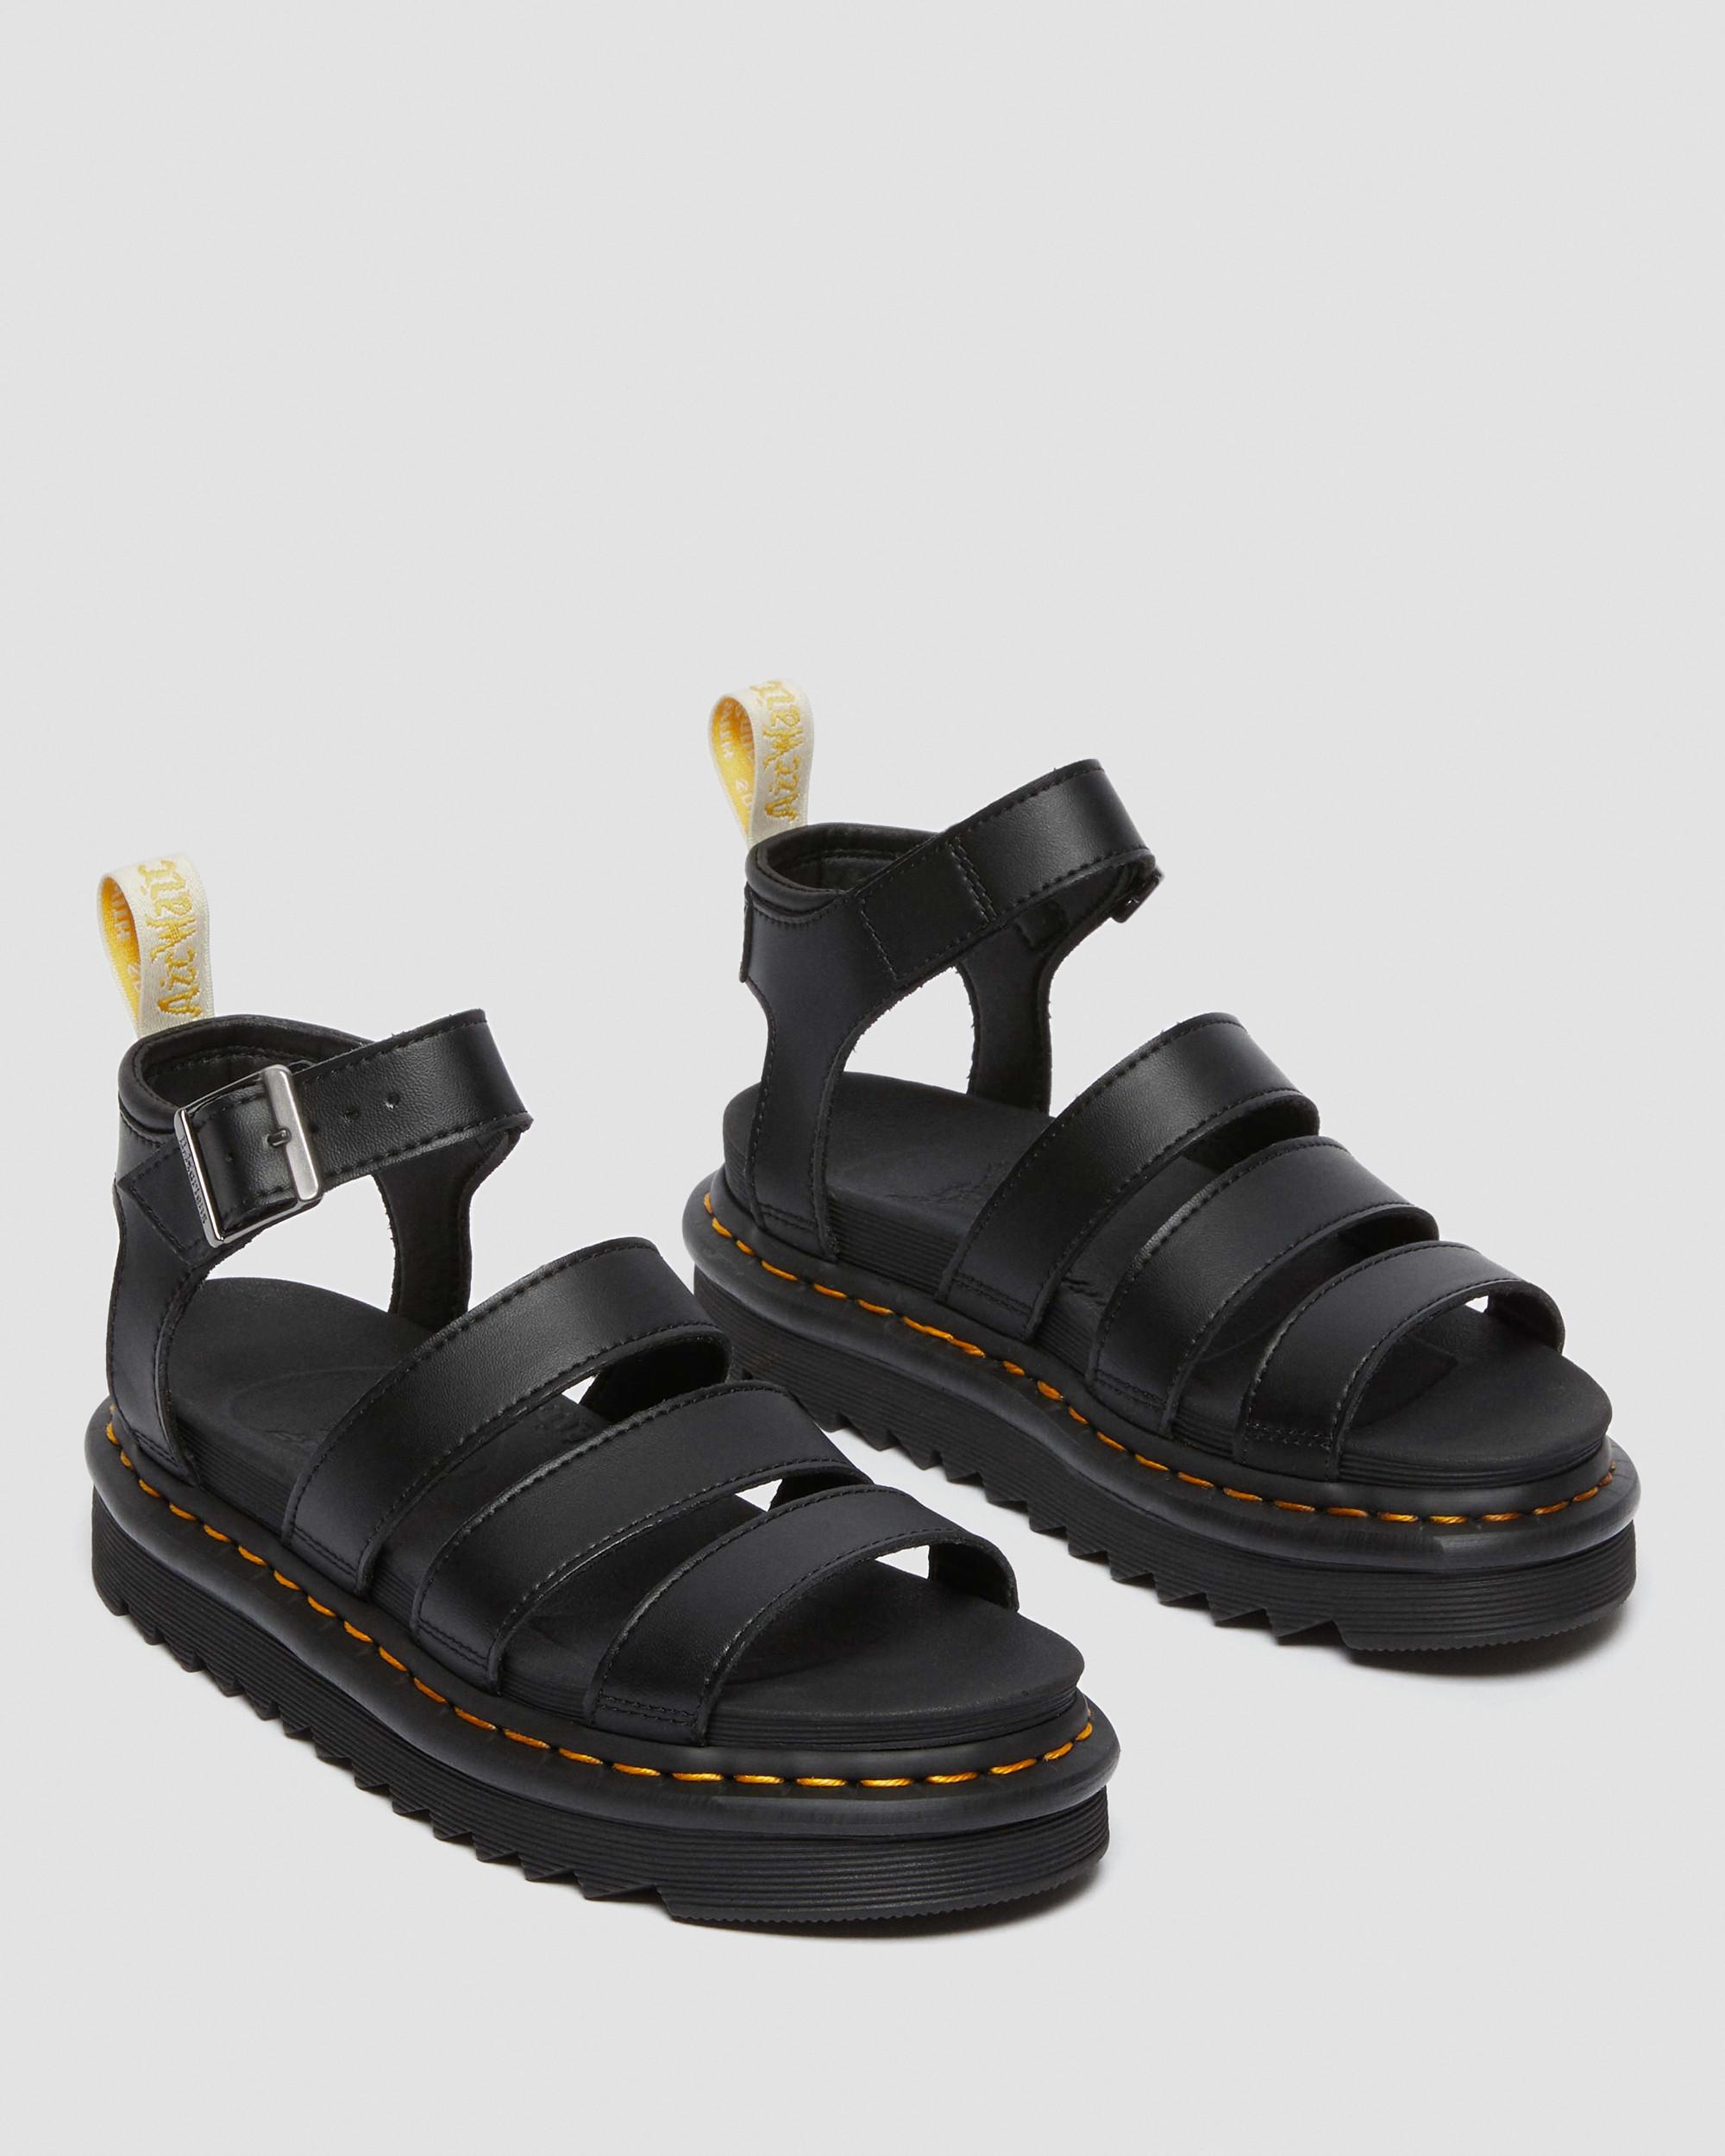 blaire vegan sandals